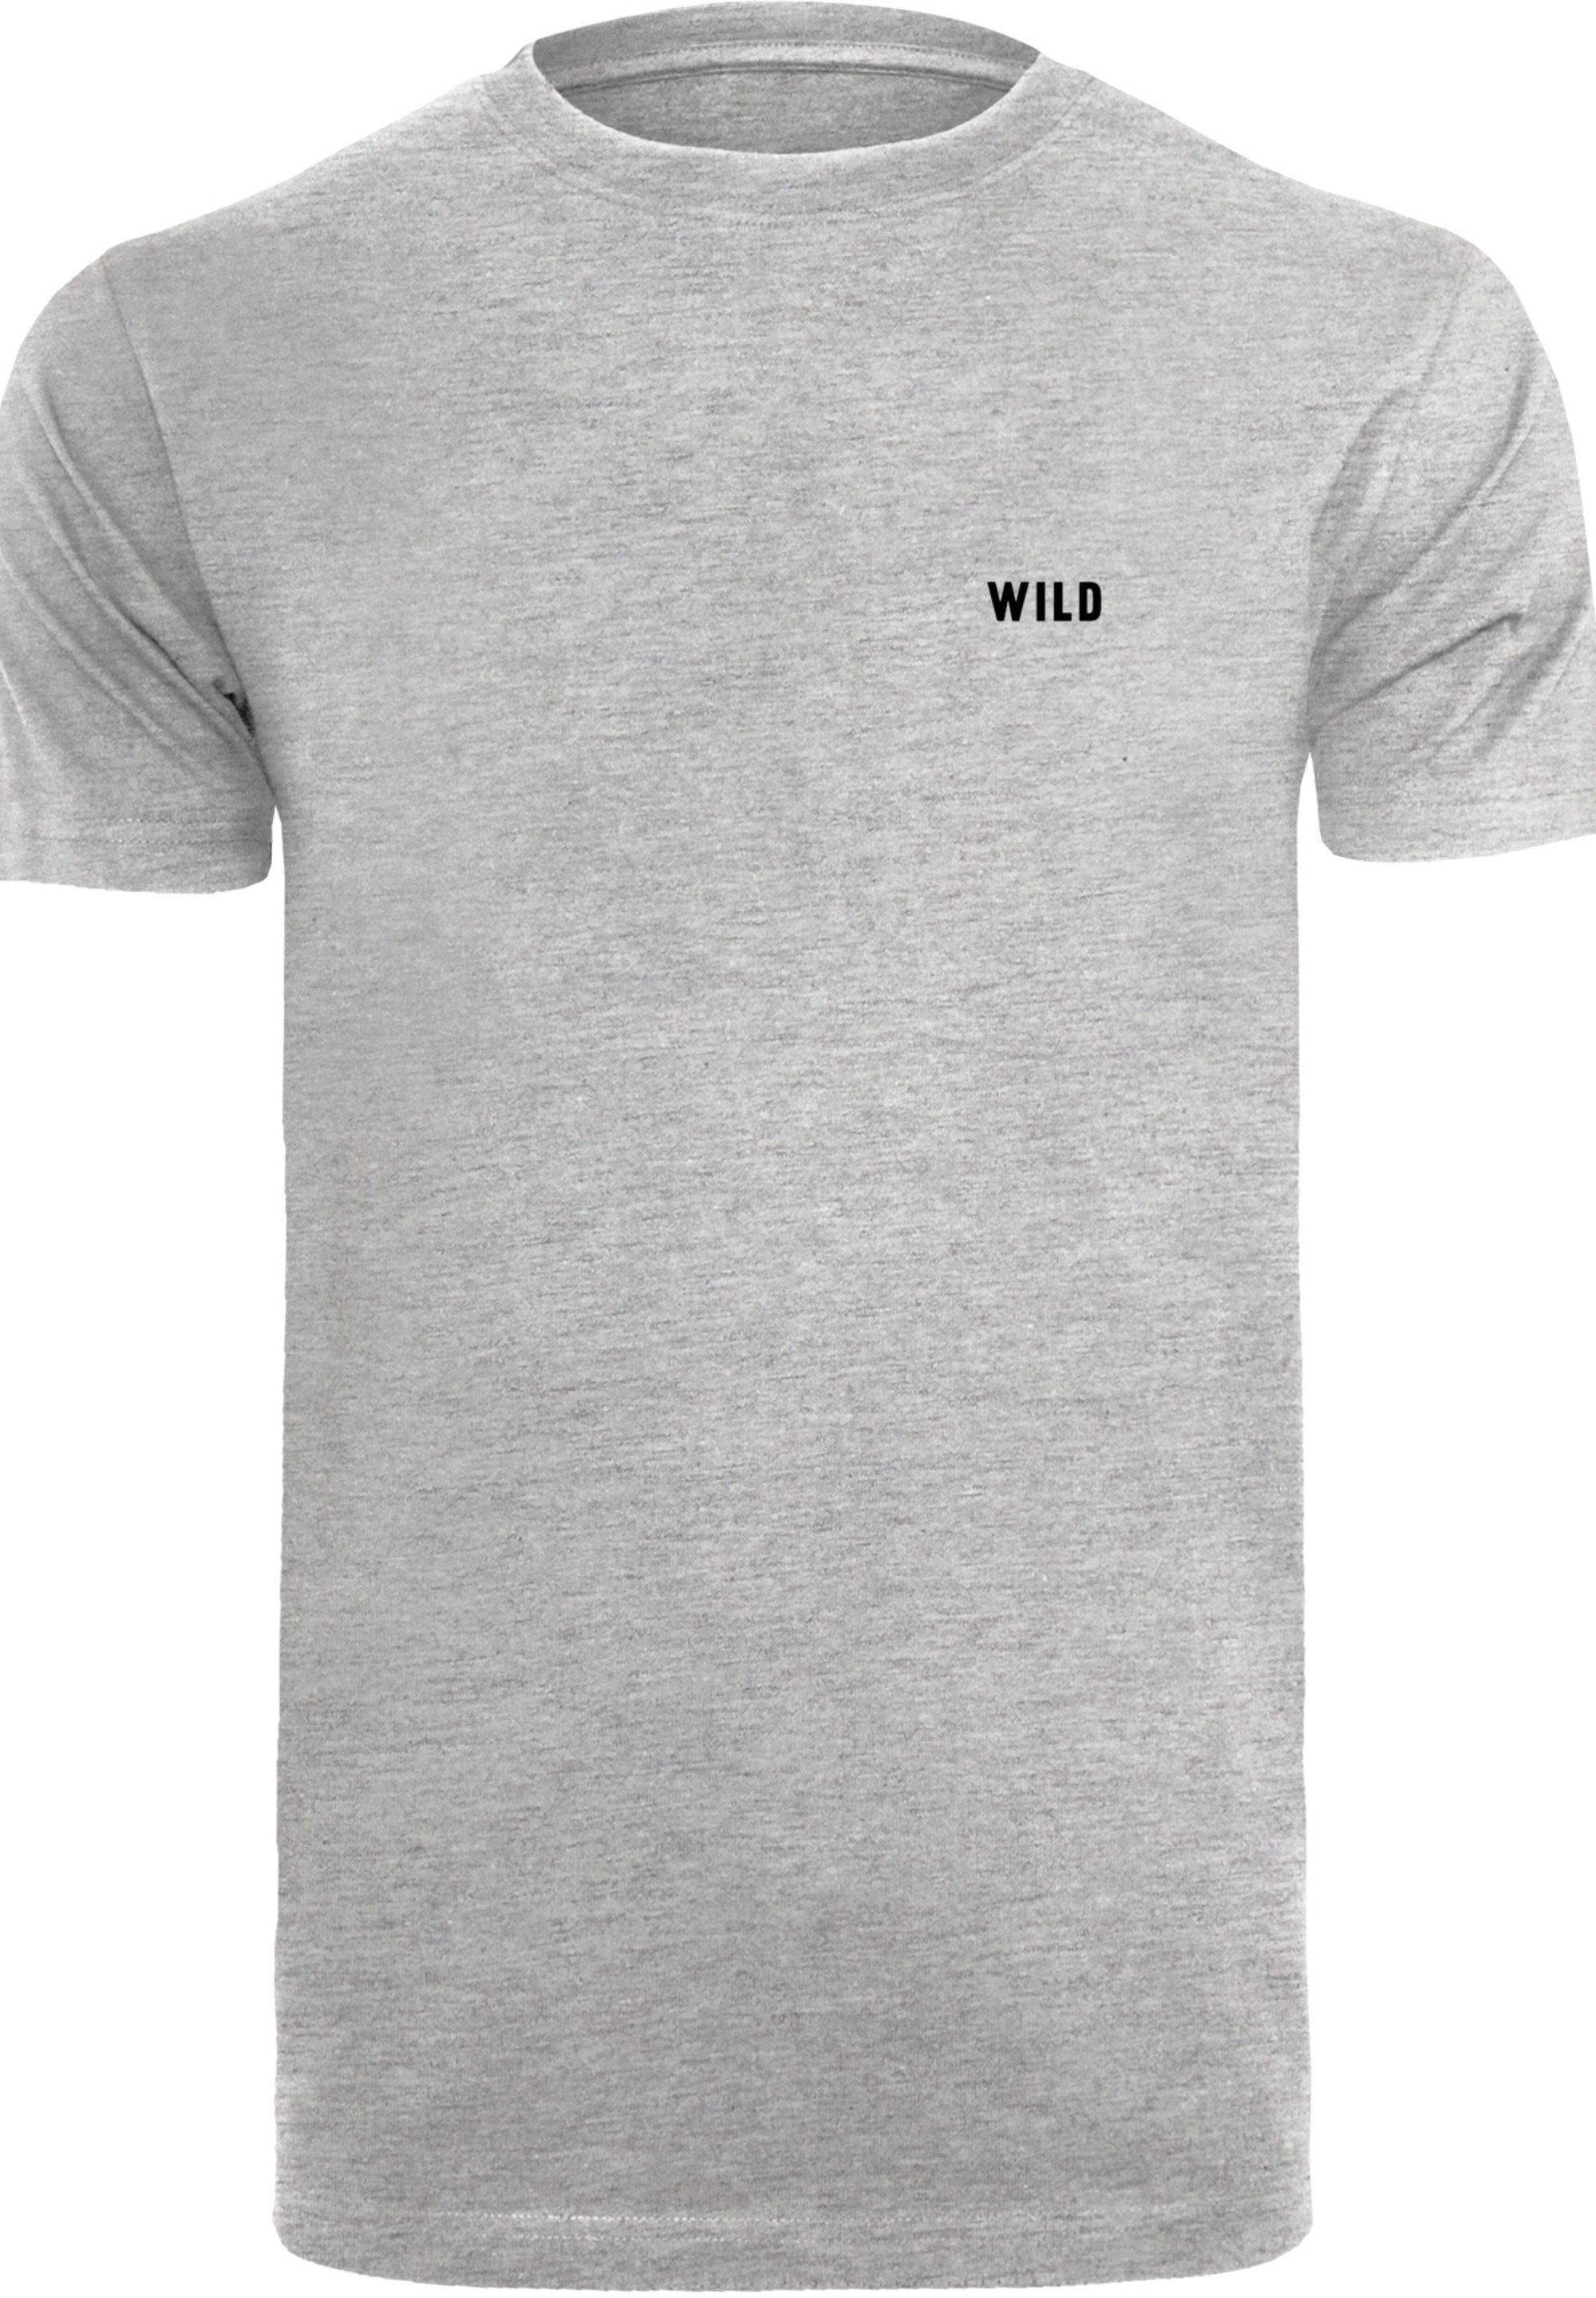 F4NT4STIC T-Shirt Jugendwort grey heather Wild slang 2022